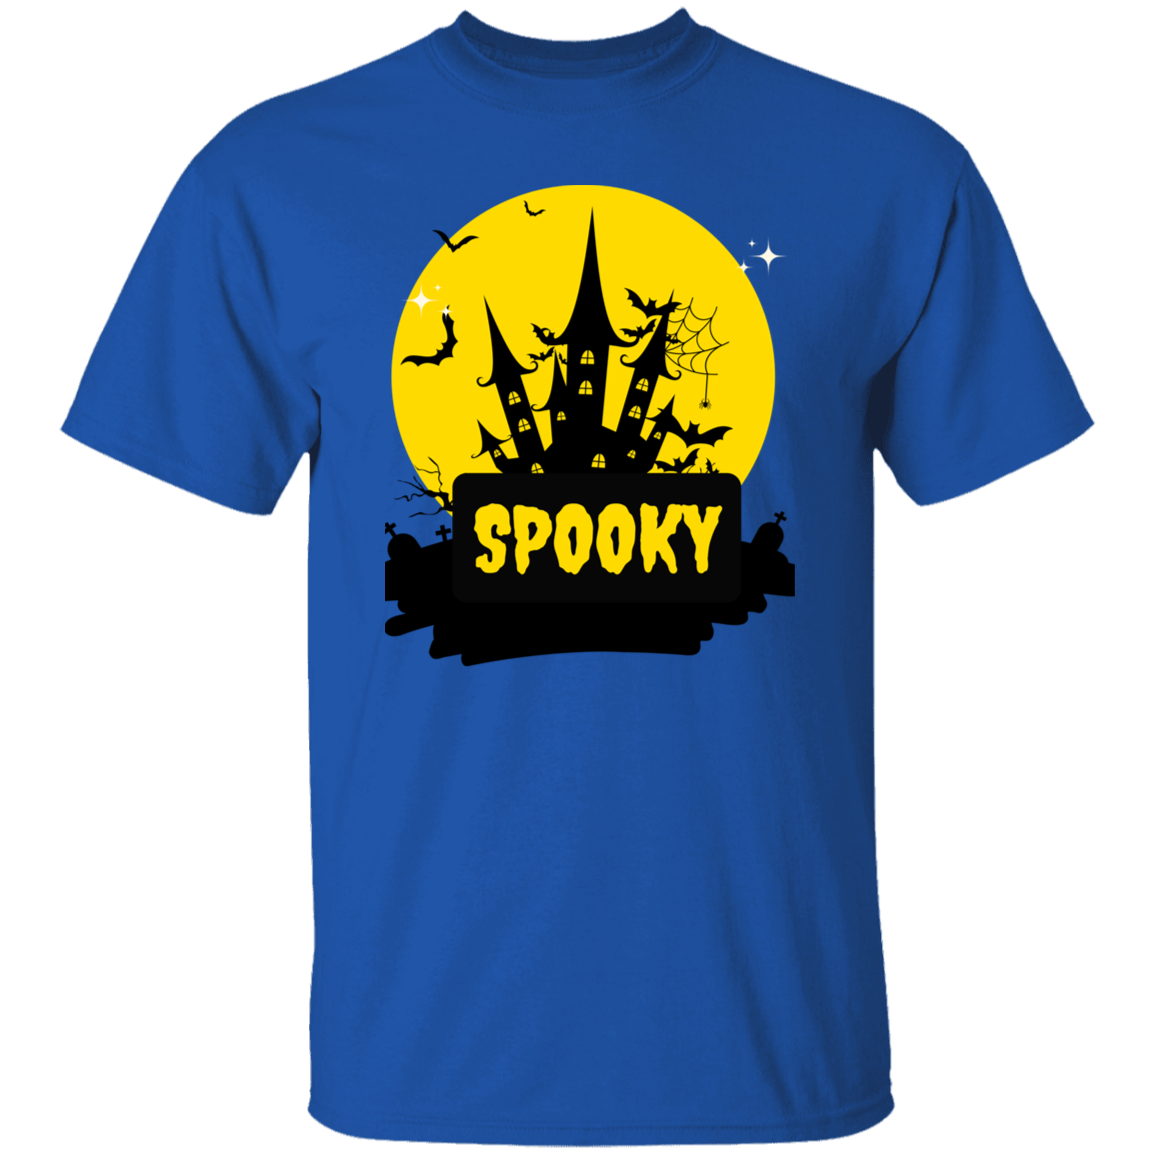 Spooky - Halloween - G500 5.3 oz. Unisex T-Shirt